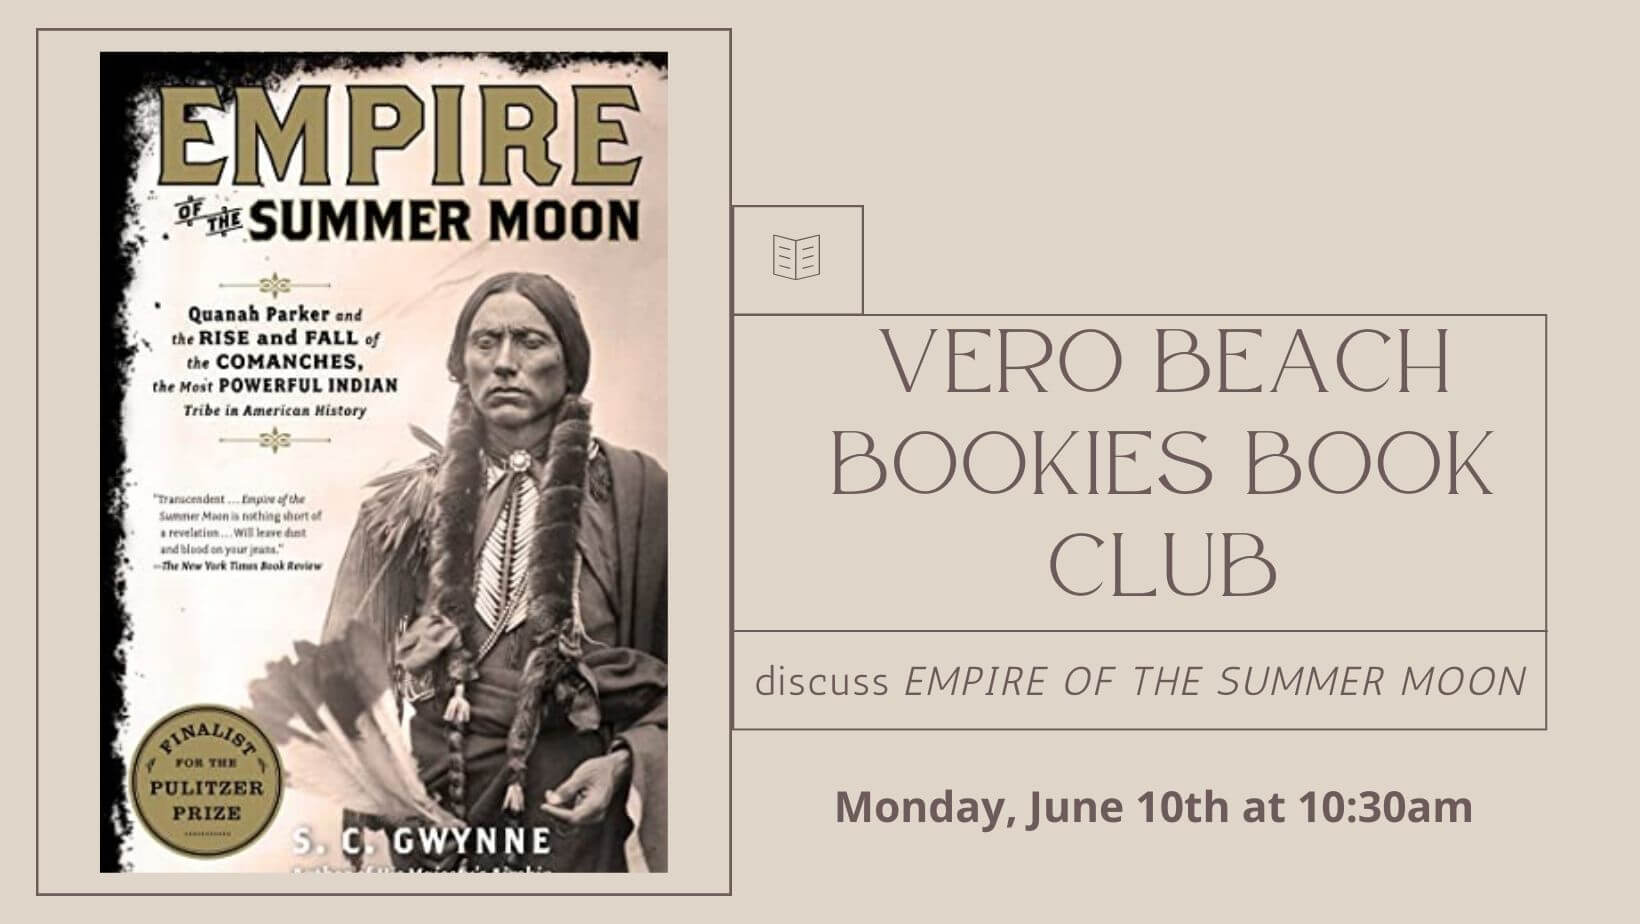 Vero Beach Book Club discusses Empire of the Summer Moon